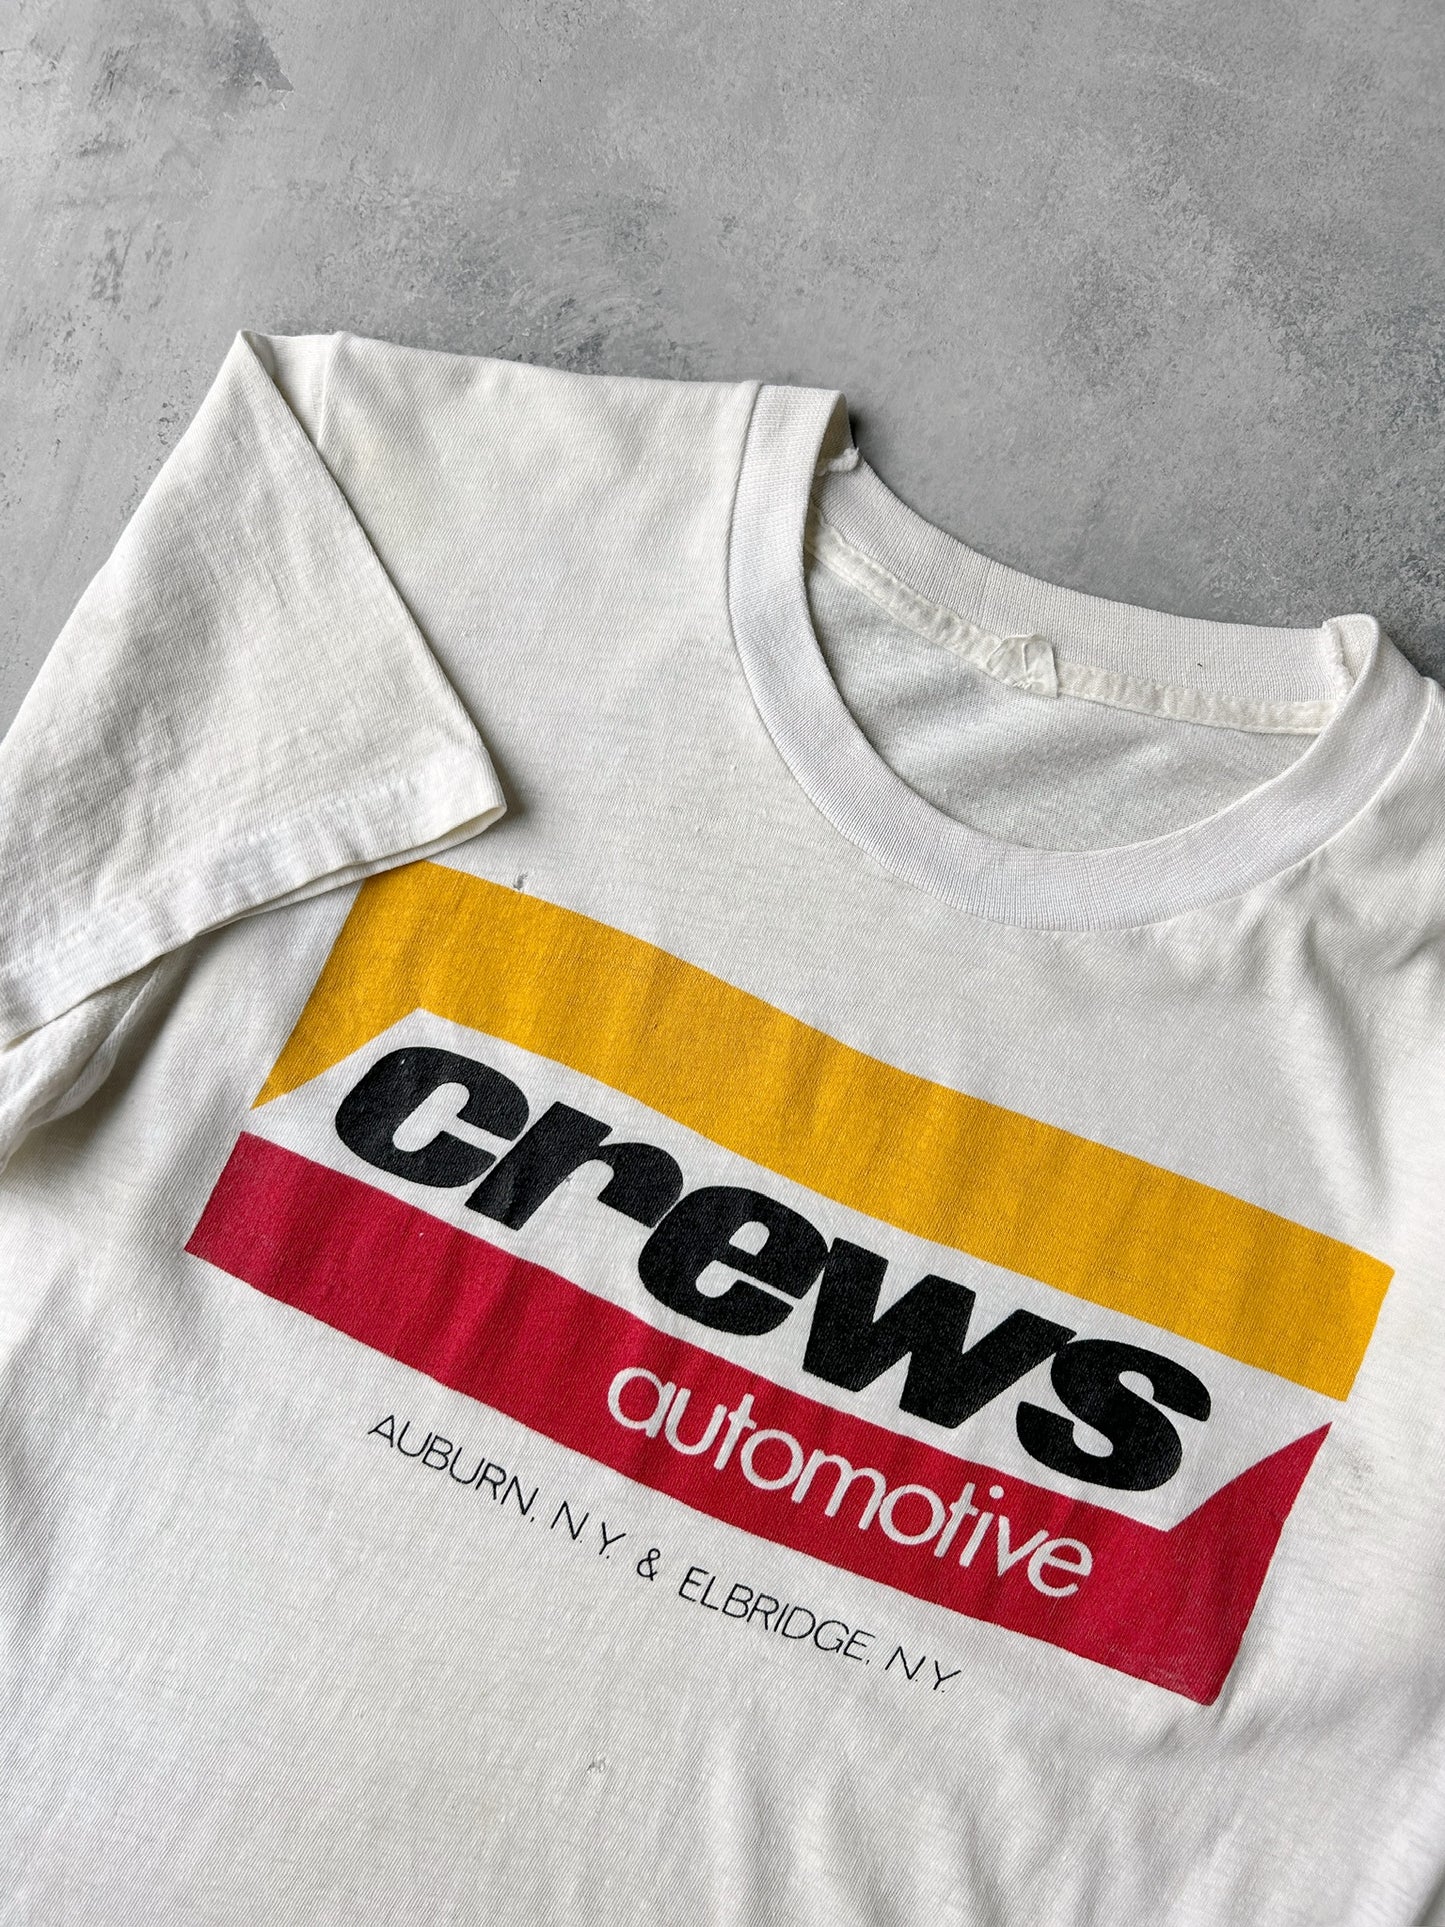 Crews Automotive T-Shirt 80's - Small